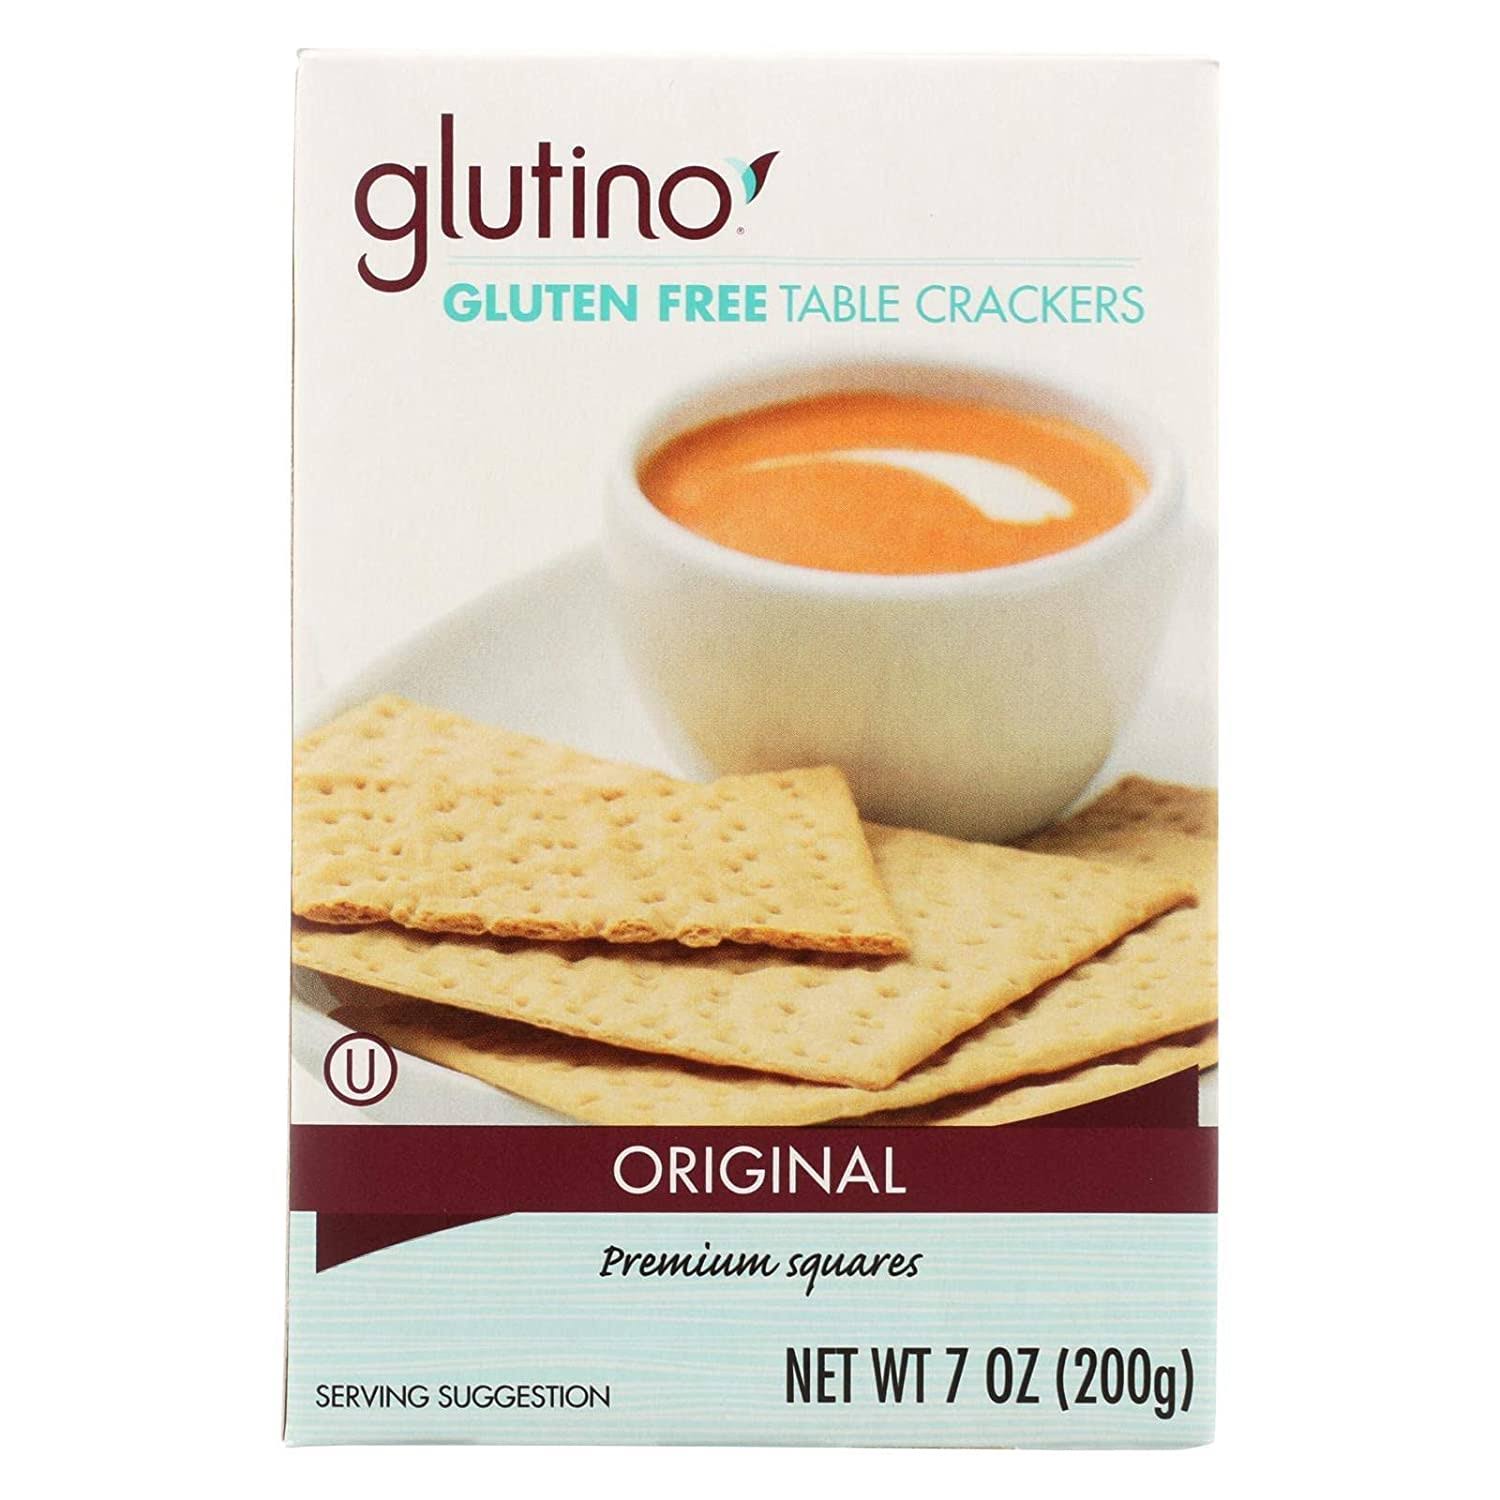 Glutino Gluten Free Table Crackers, Original - 7 oz box